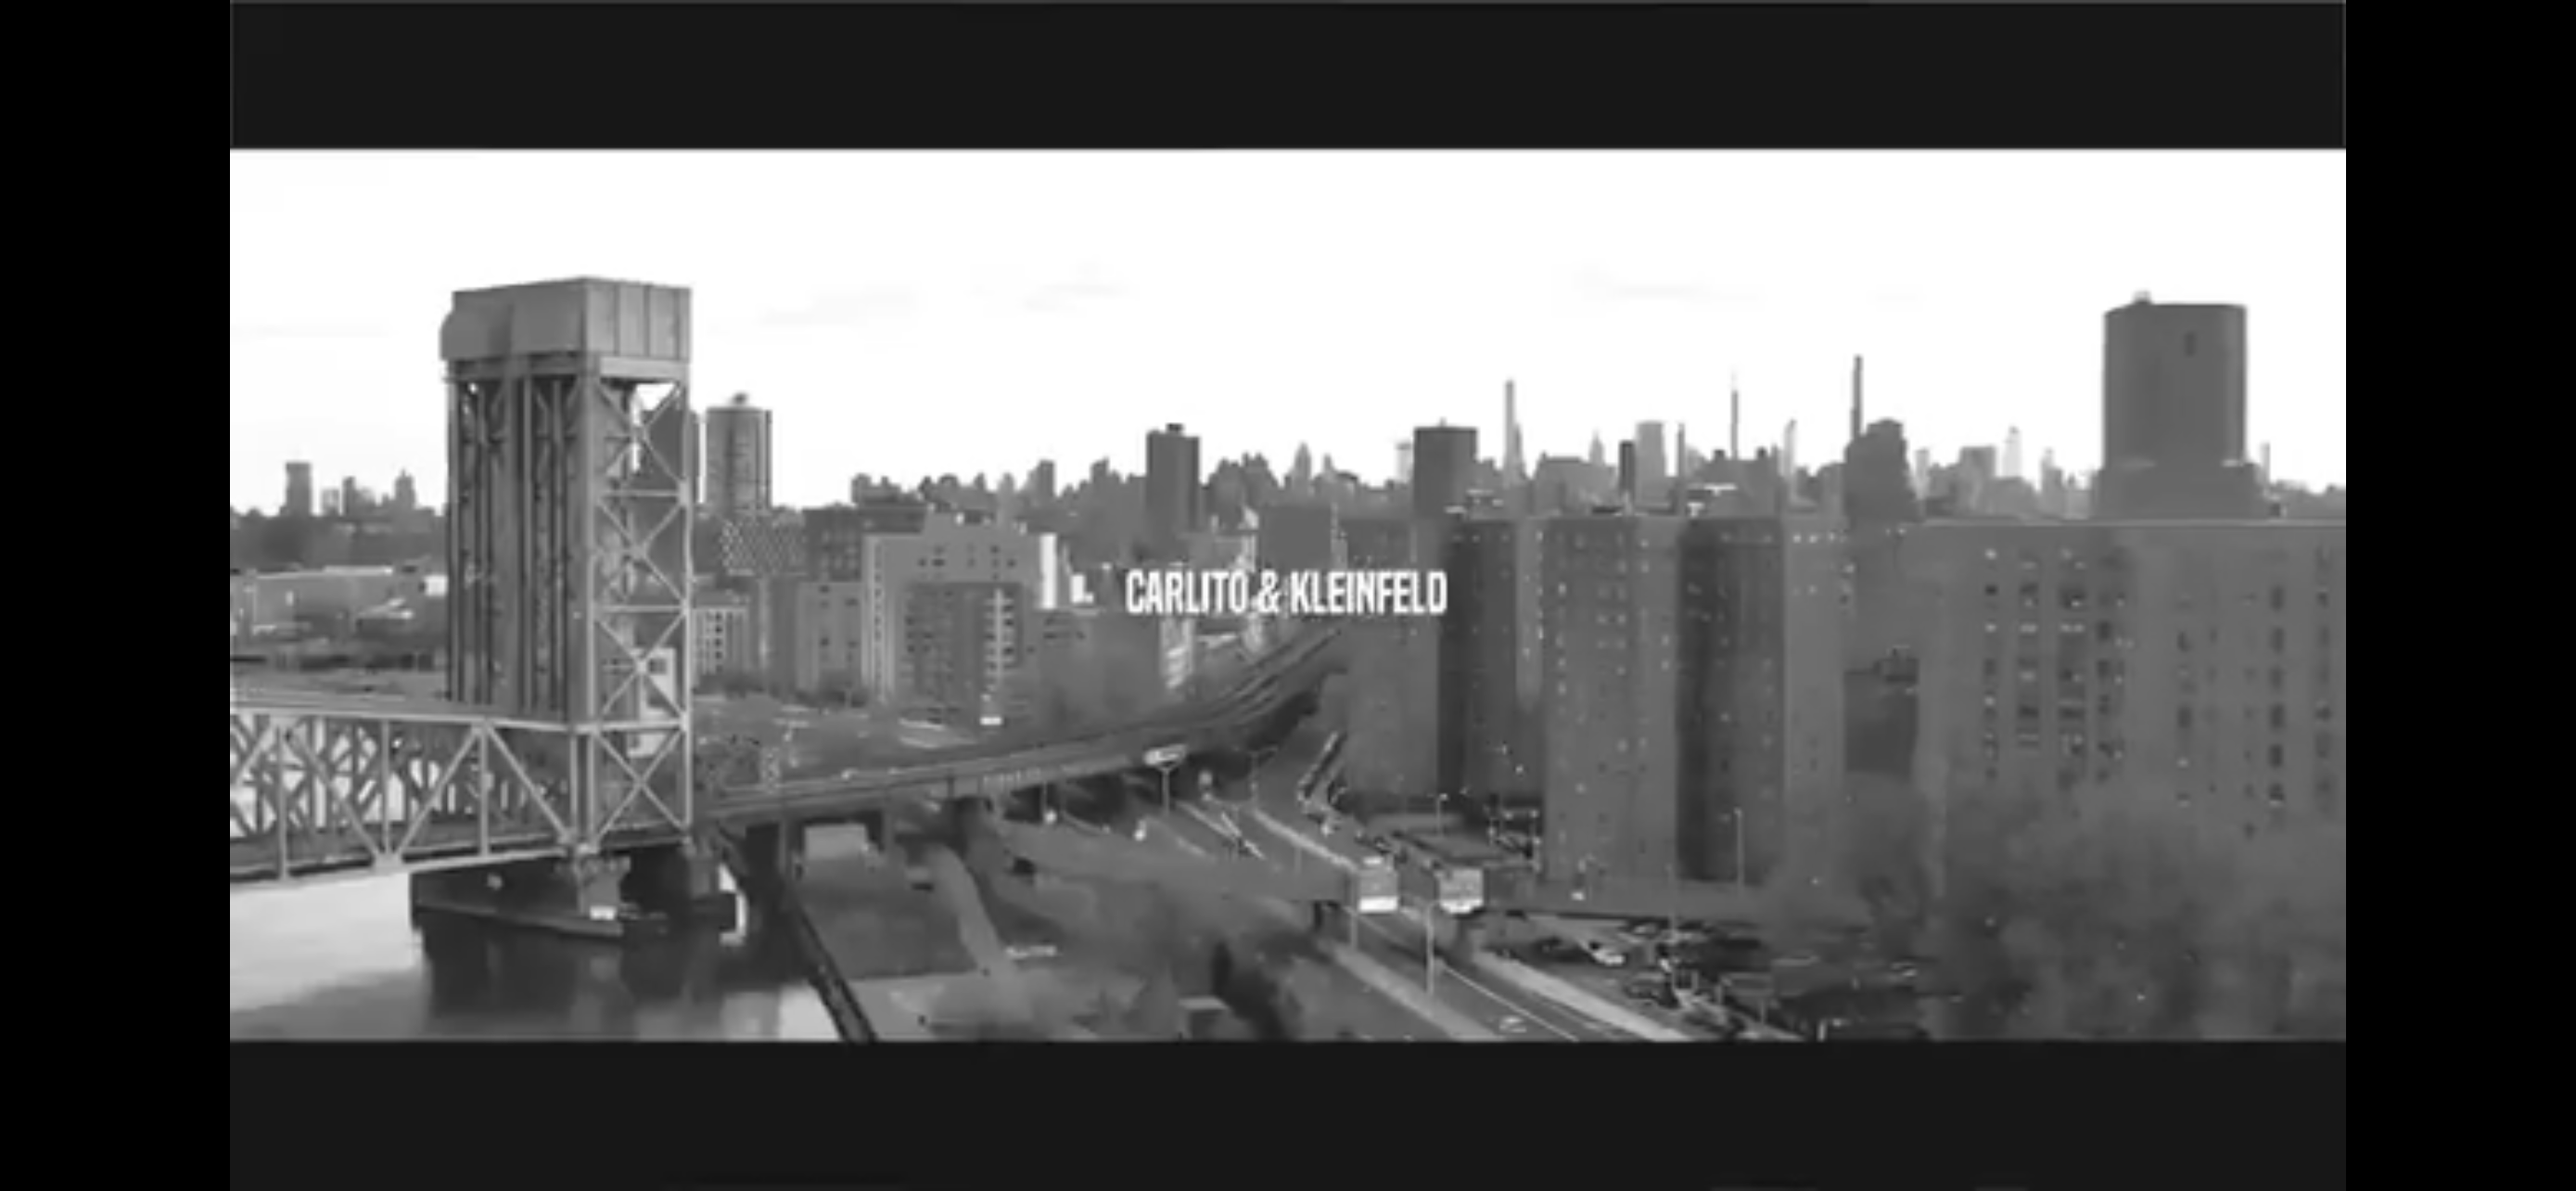 Jay Royale & Kool G. Rap "Carlito & Kleinfeld" Prod by Ray Sosa [video]